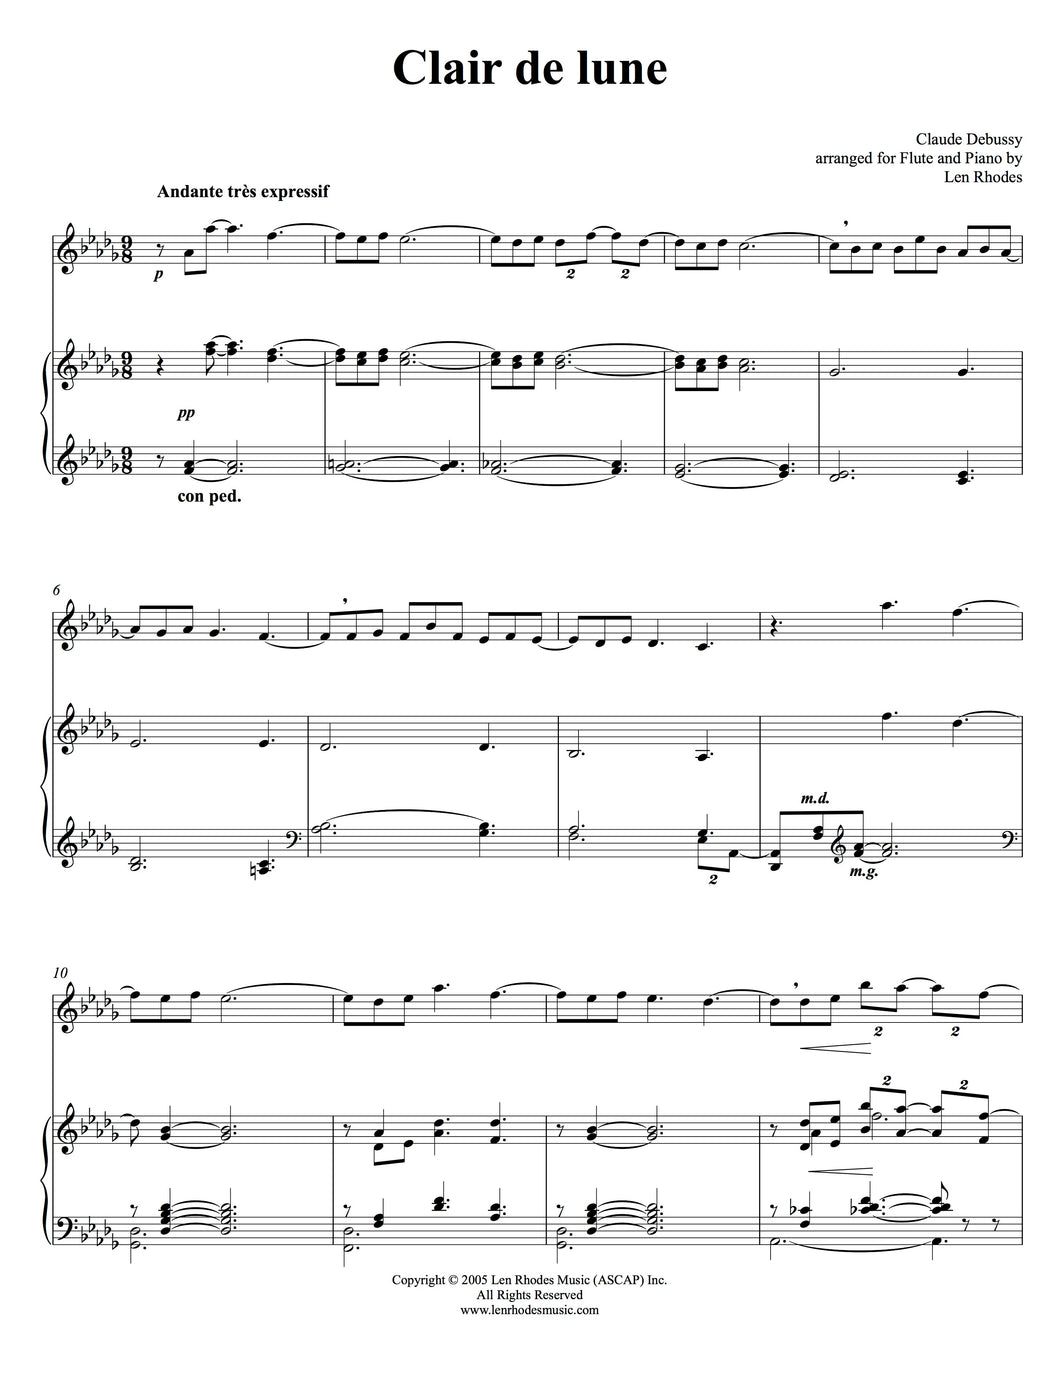 Clair de lune, Debussy - Flute and Piano